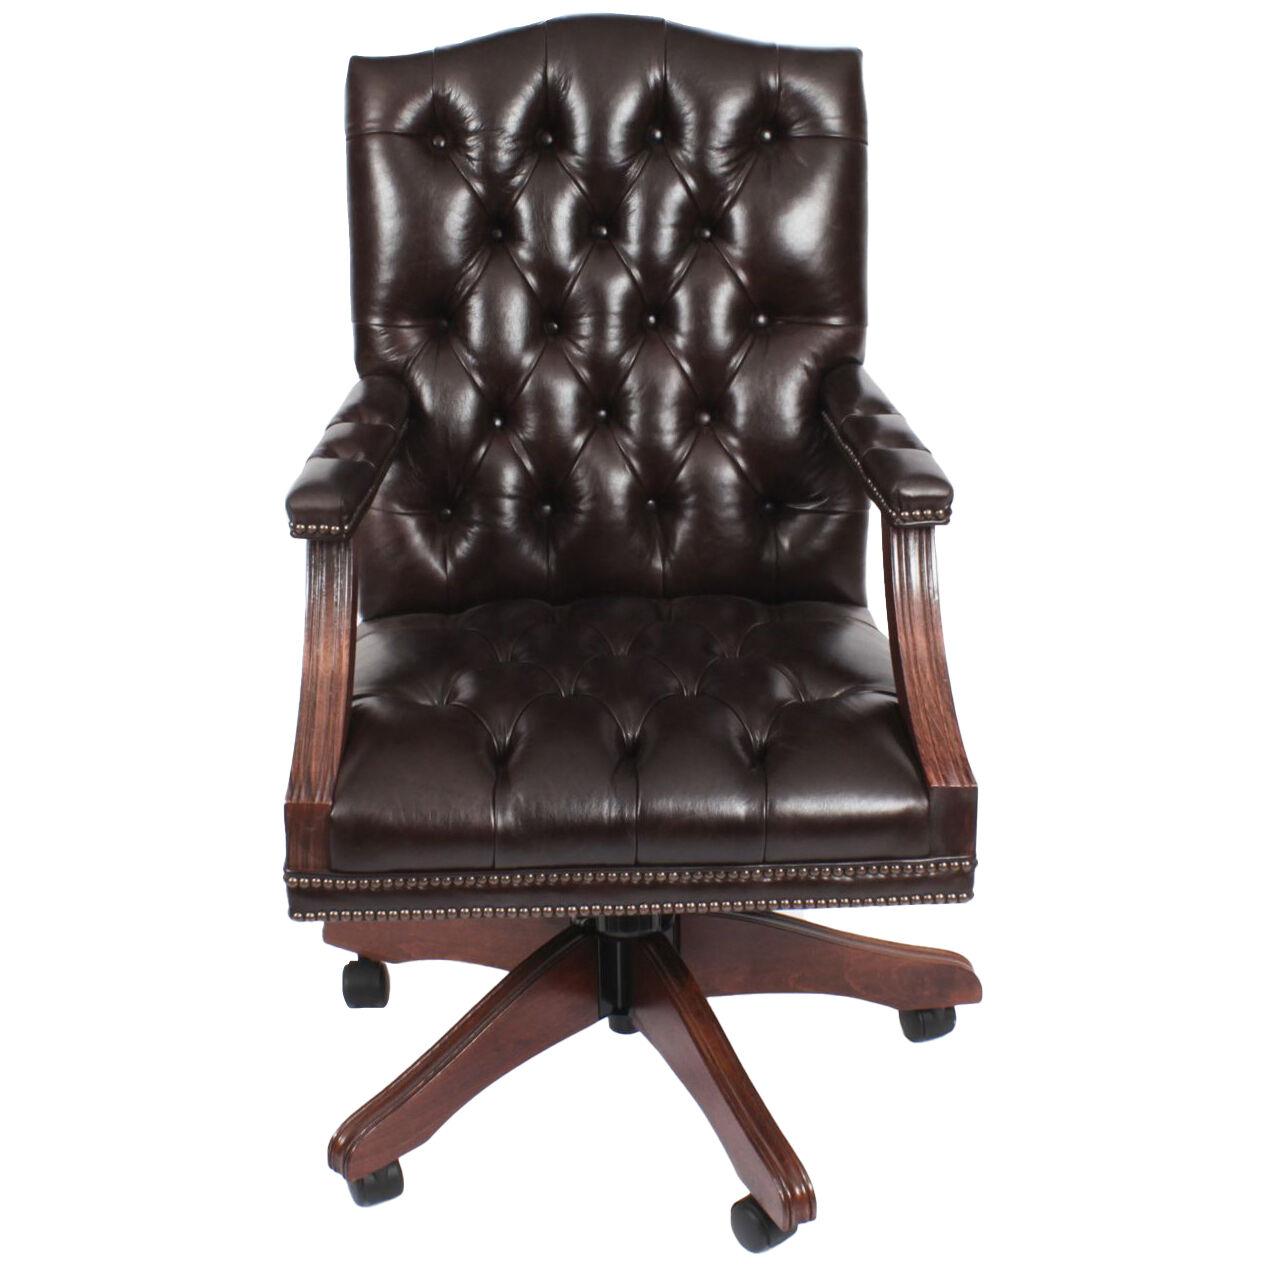 Bespoke English Handmade Gainsborough Leather Desk Chair Smoke Brown